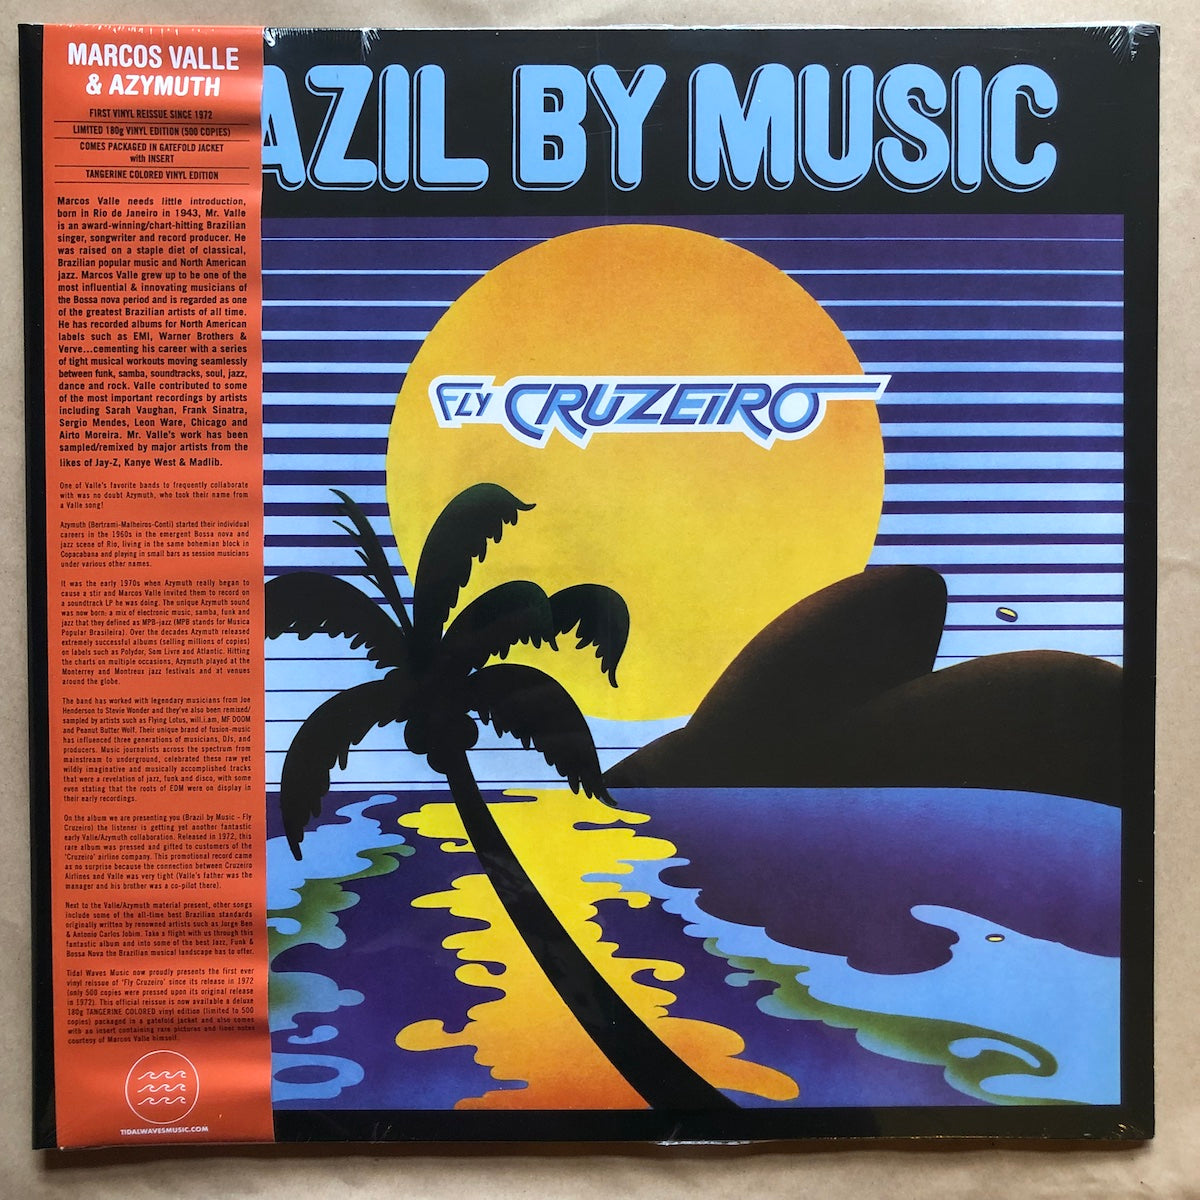 Fly Cruzeiro: Tangerine Vinyl LP